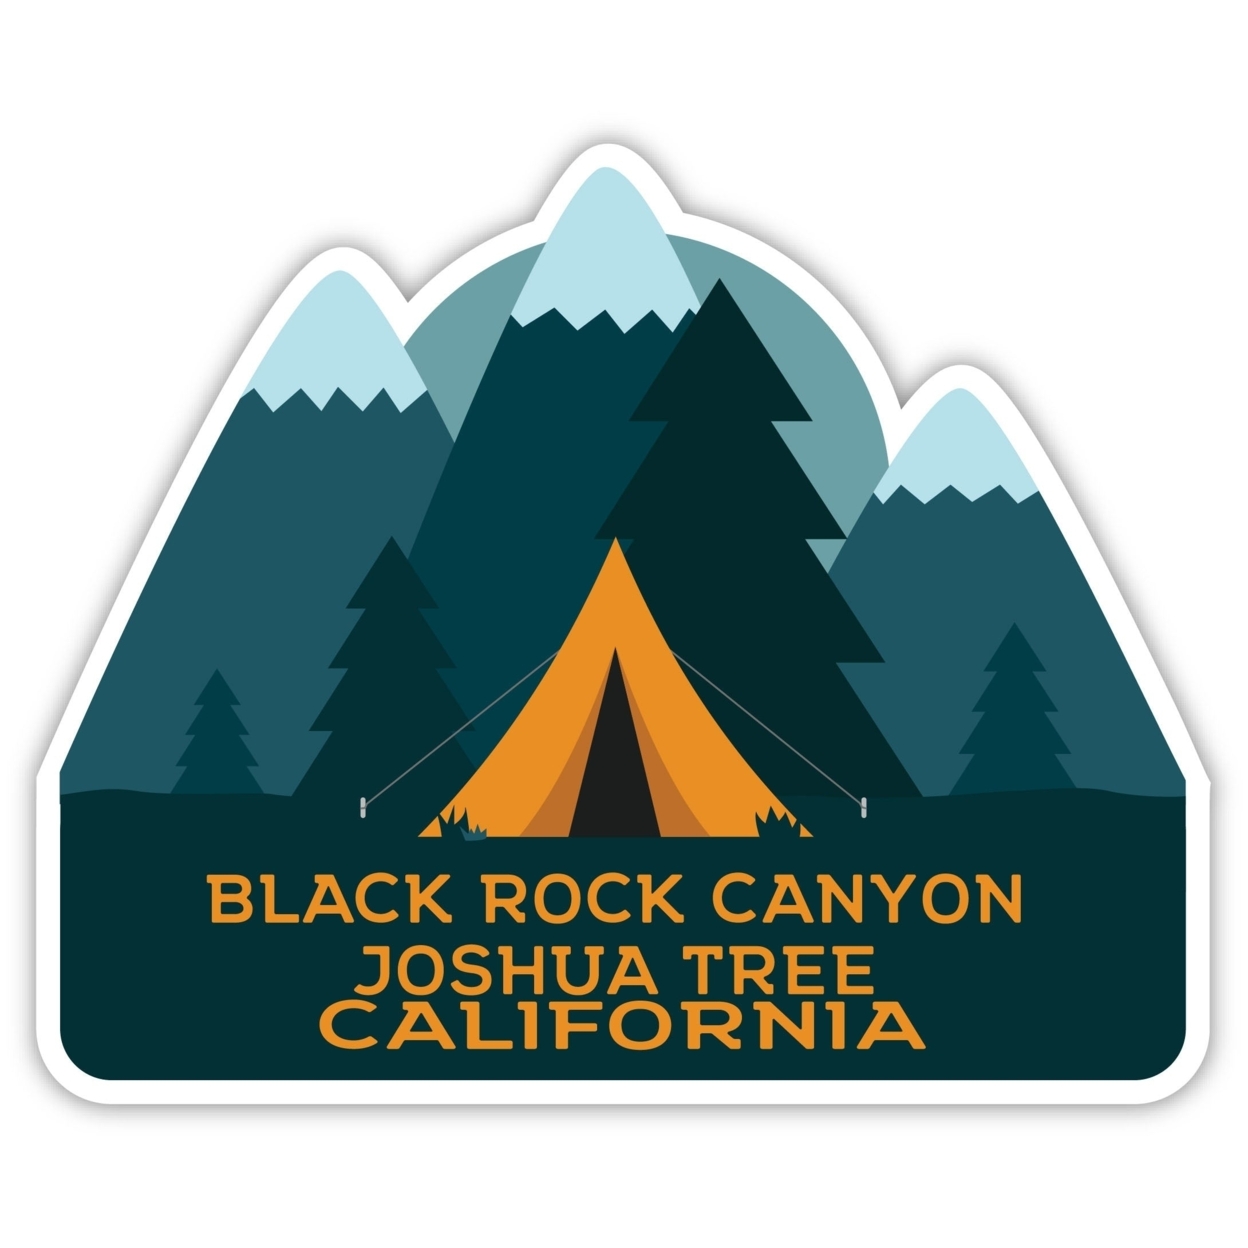 Black Rock Canyon Joshua Tree California Souvenir Decorative Stickers (Choose Theme And Size) - Single Unit, 12-Inch, Tent